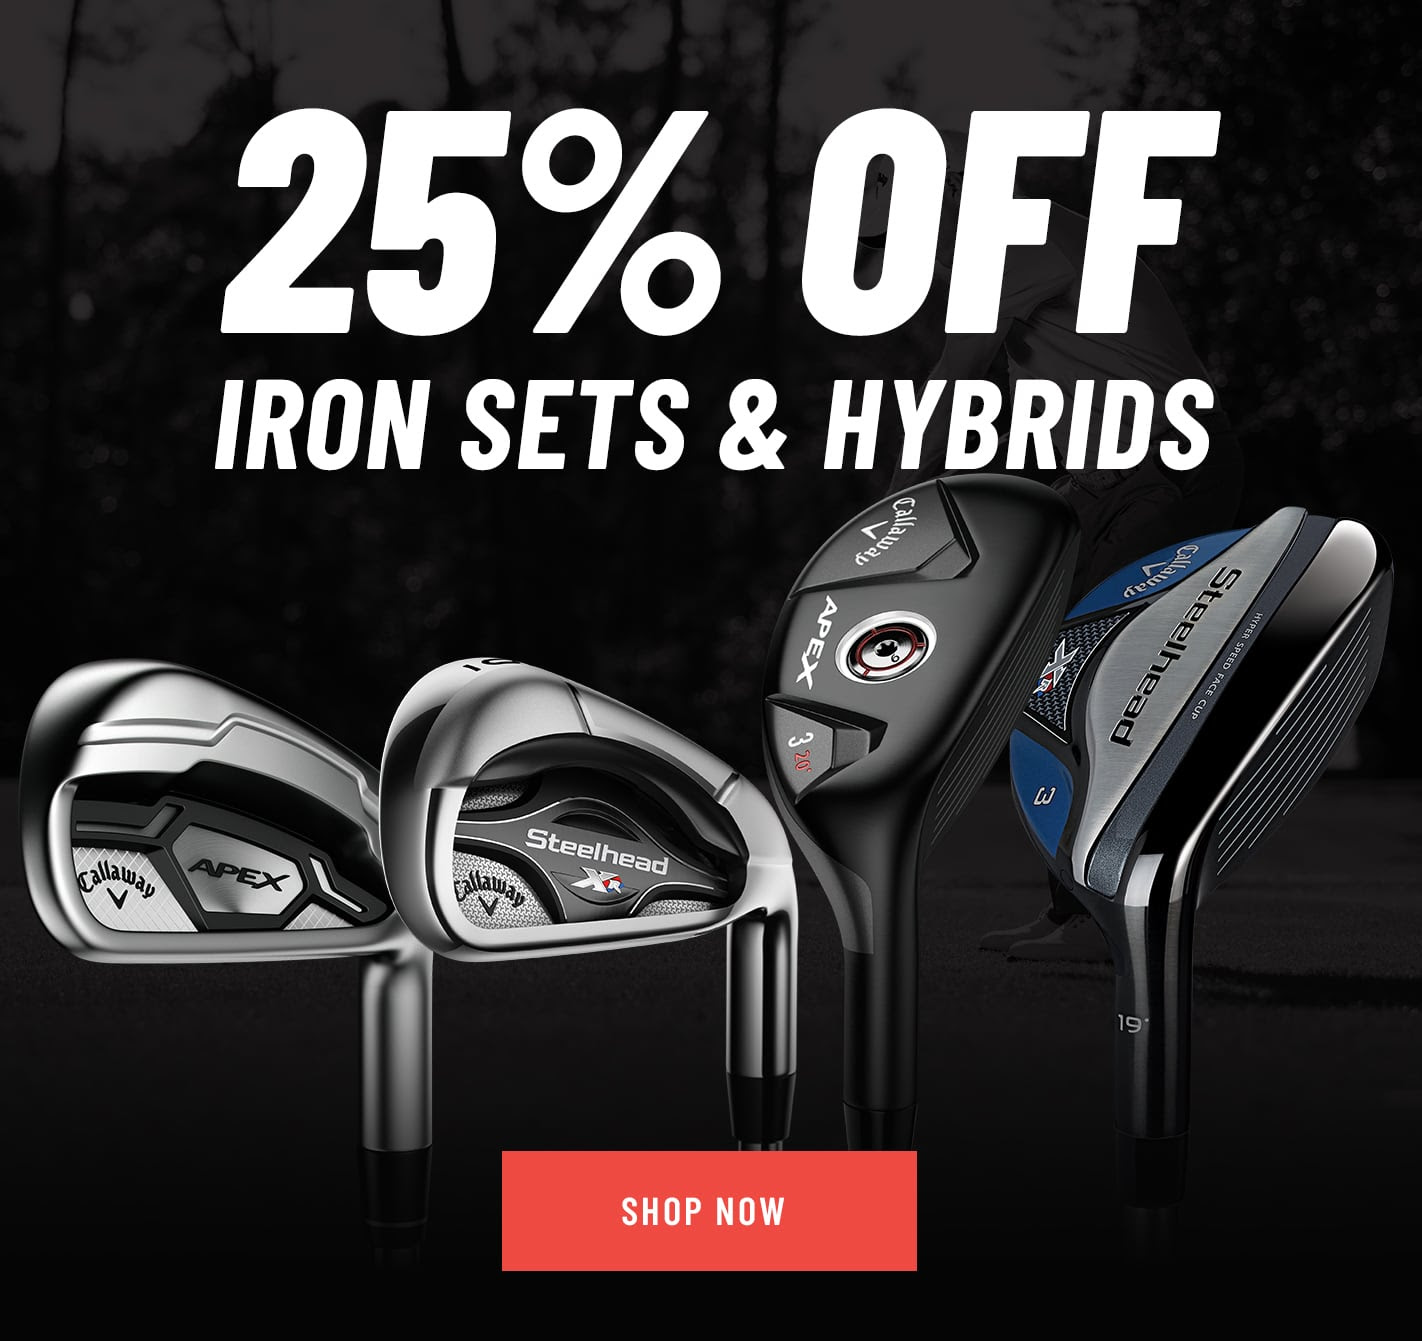 25% OFF Iron Sets & Hybrids!